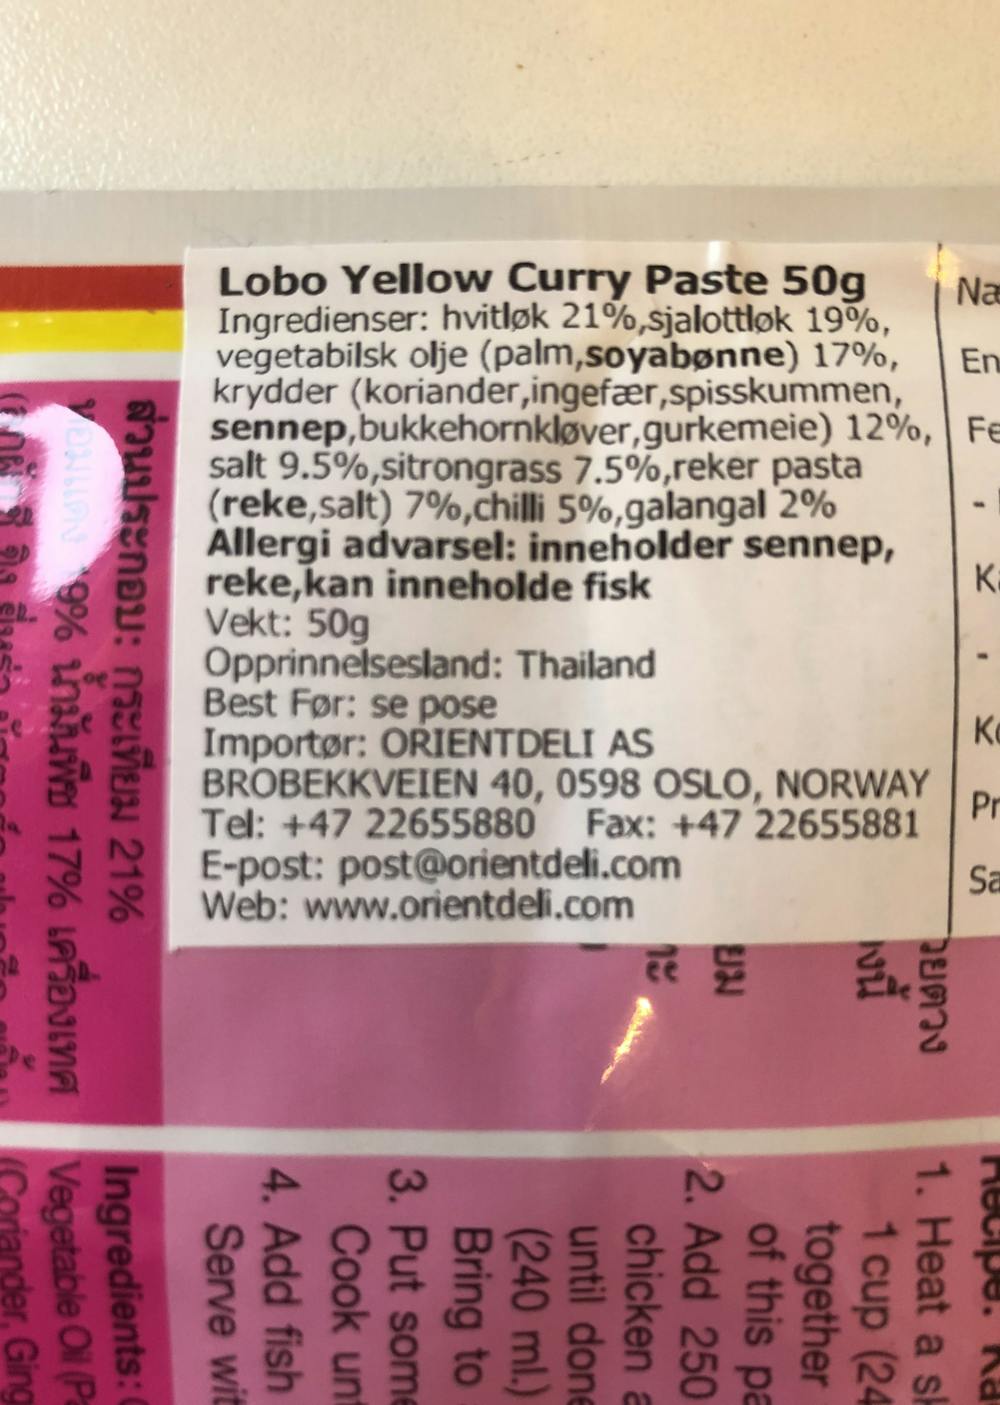 Ingrediensliste - Yellow curry paste, Lobo